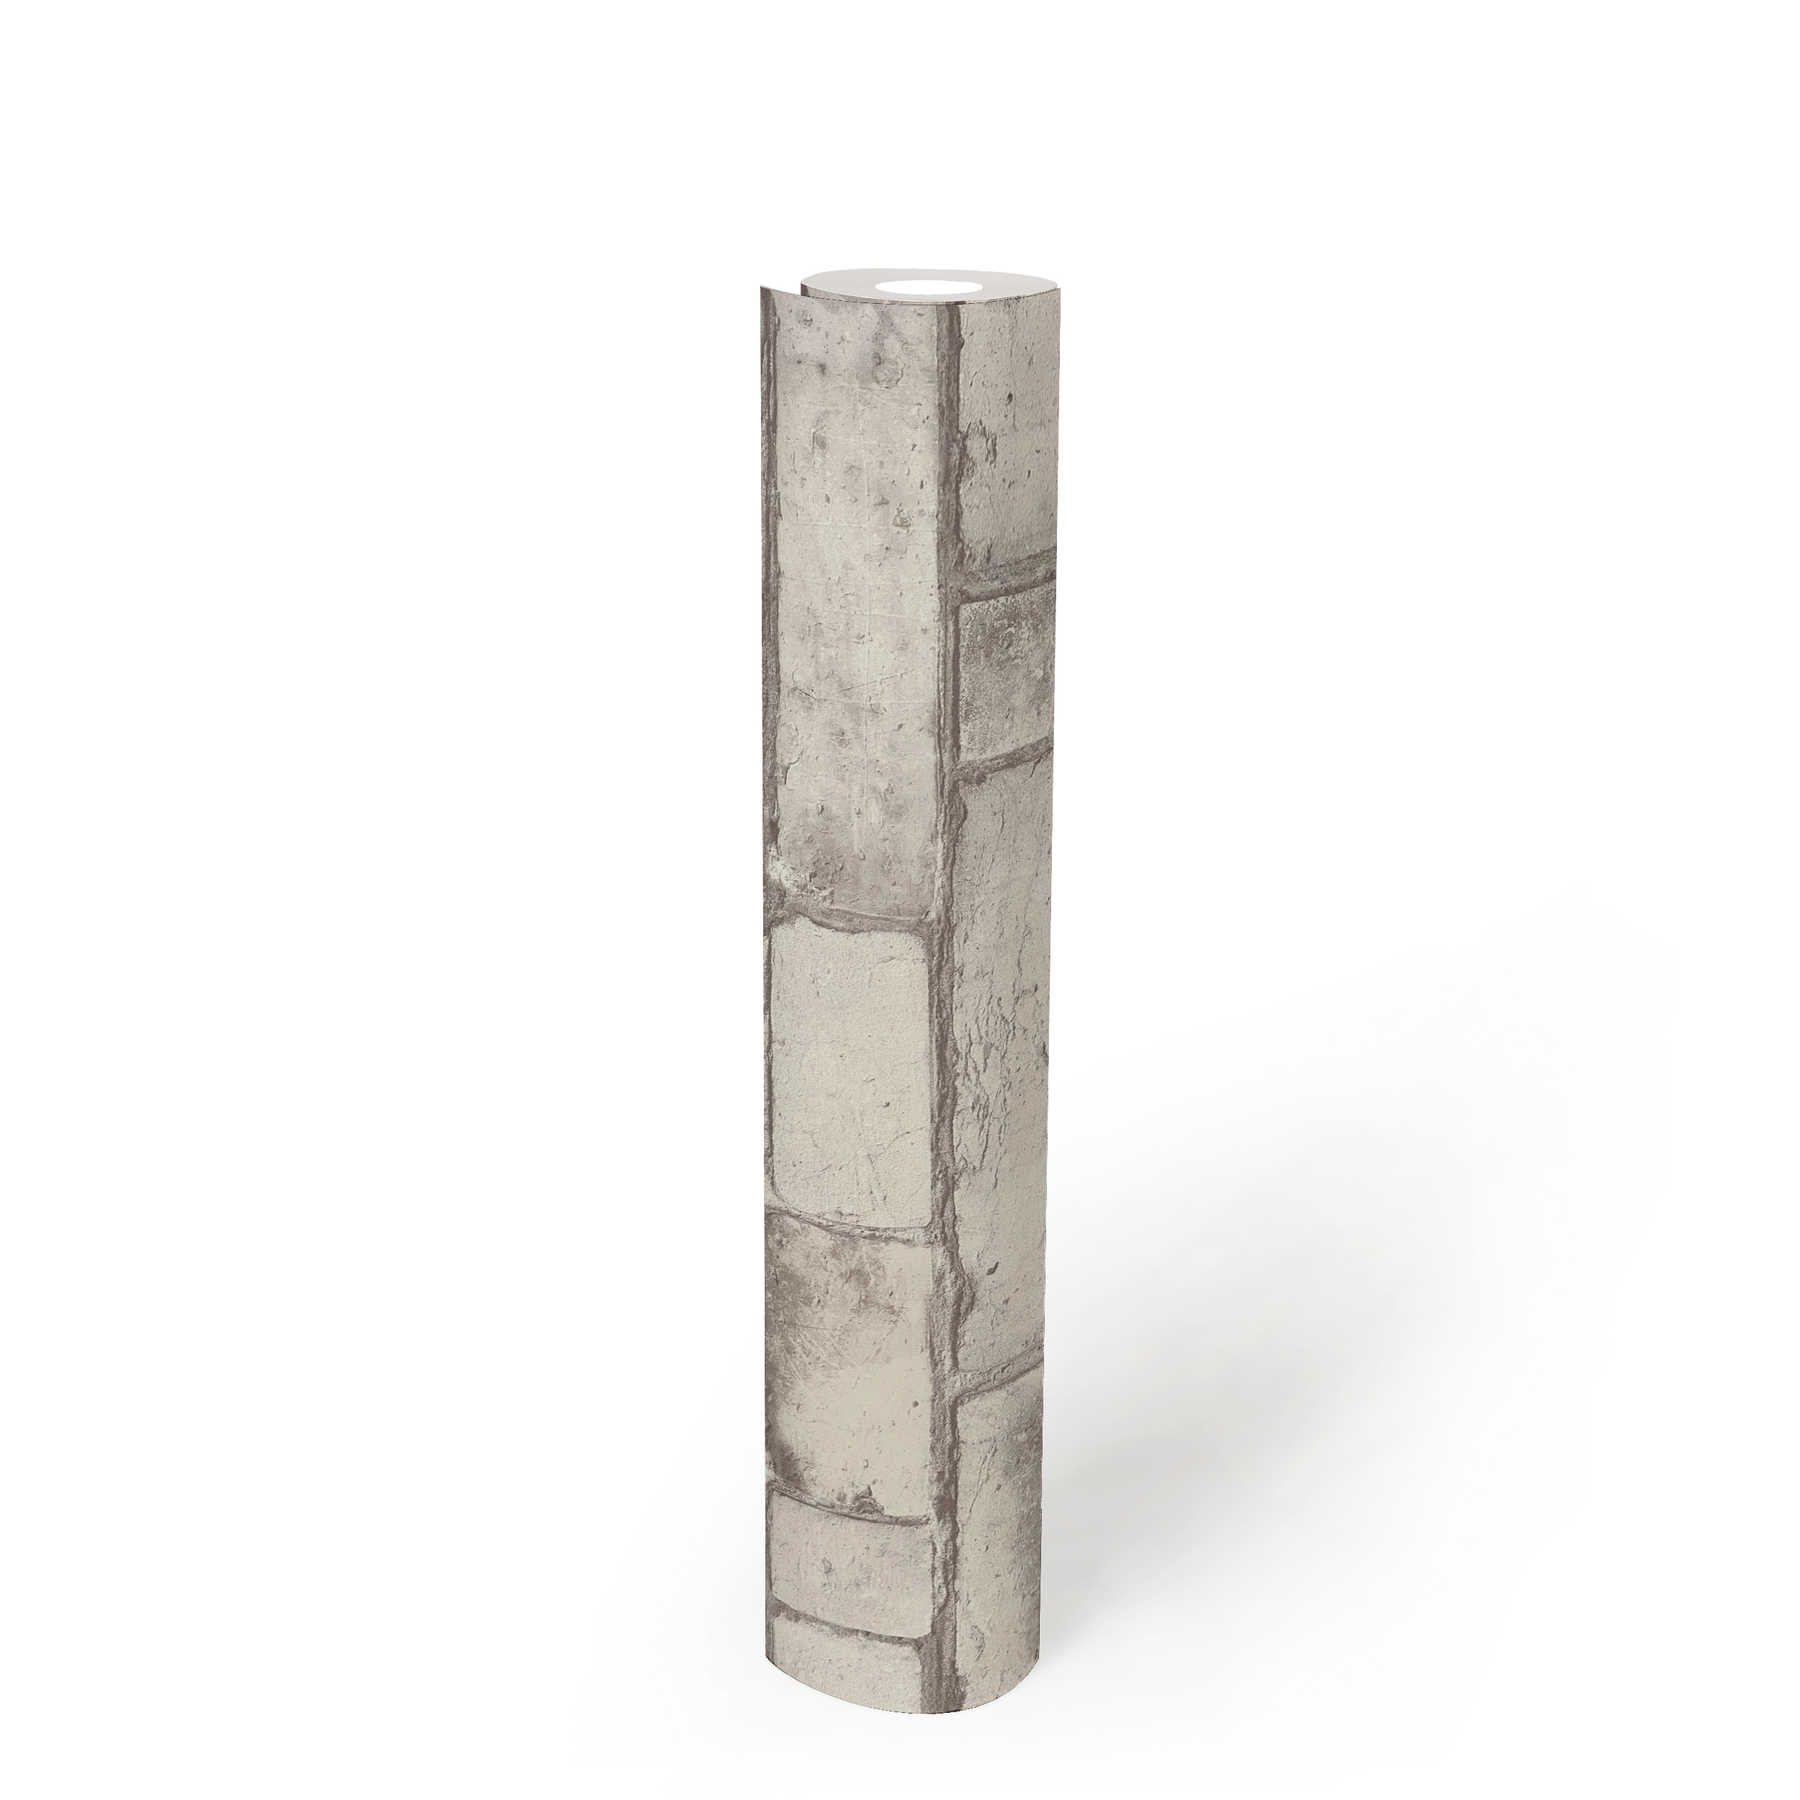             Steintapete Mauer-Motiv im rustikalen Used-Look – Grau, Weiß
        